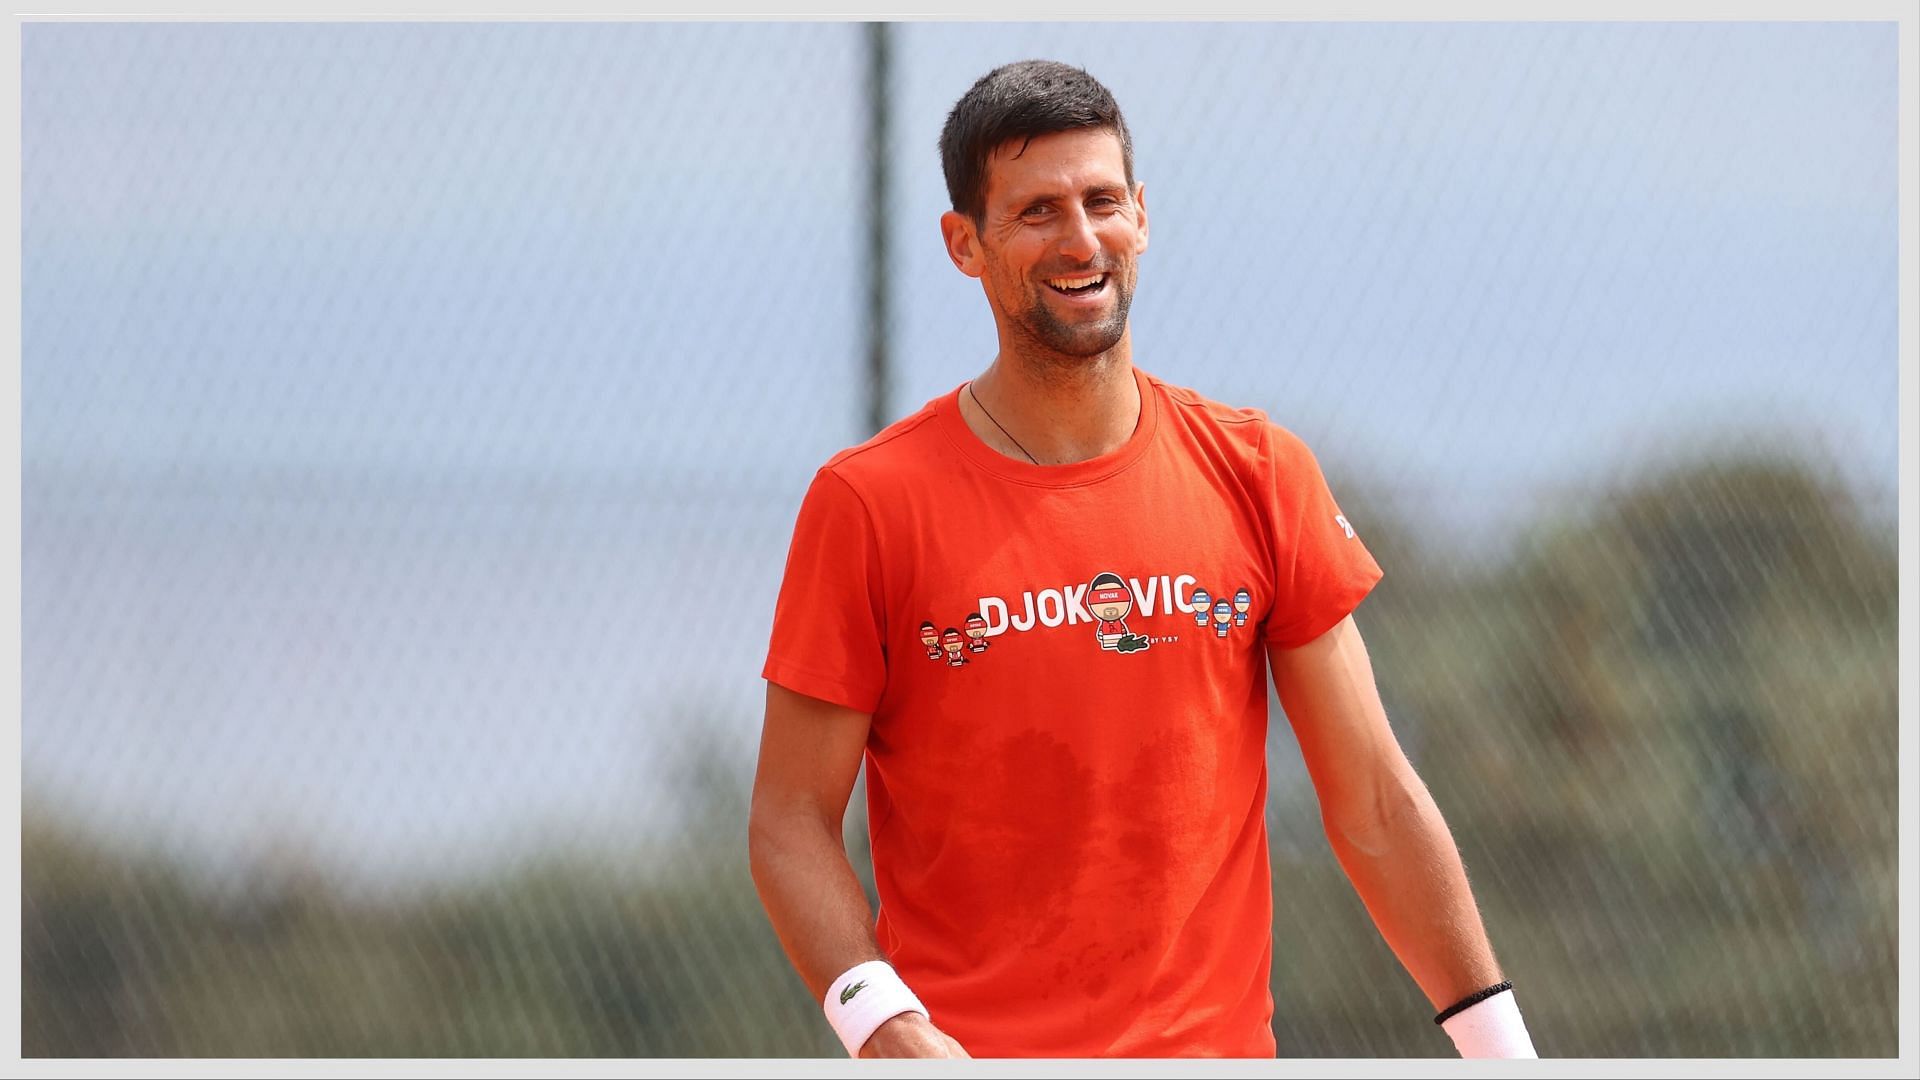 Novak Djokovic's official outfit for Paris Olympics 2024 revealed